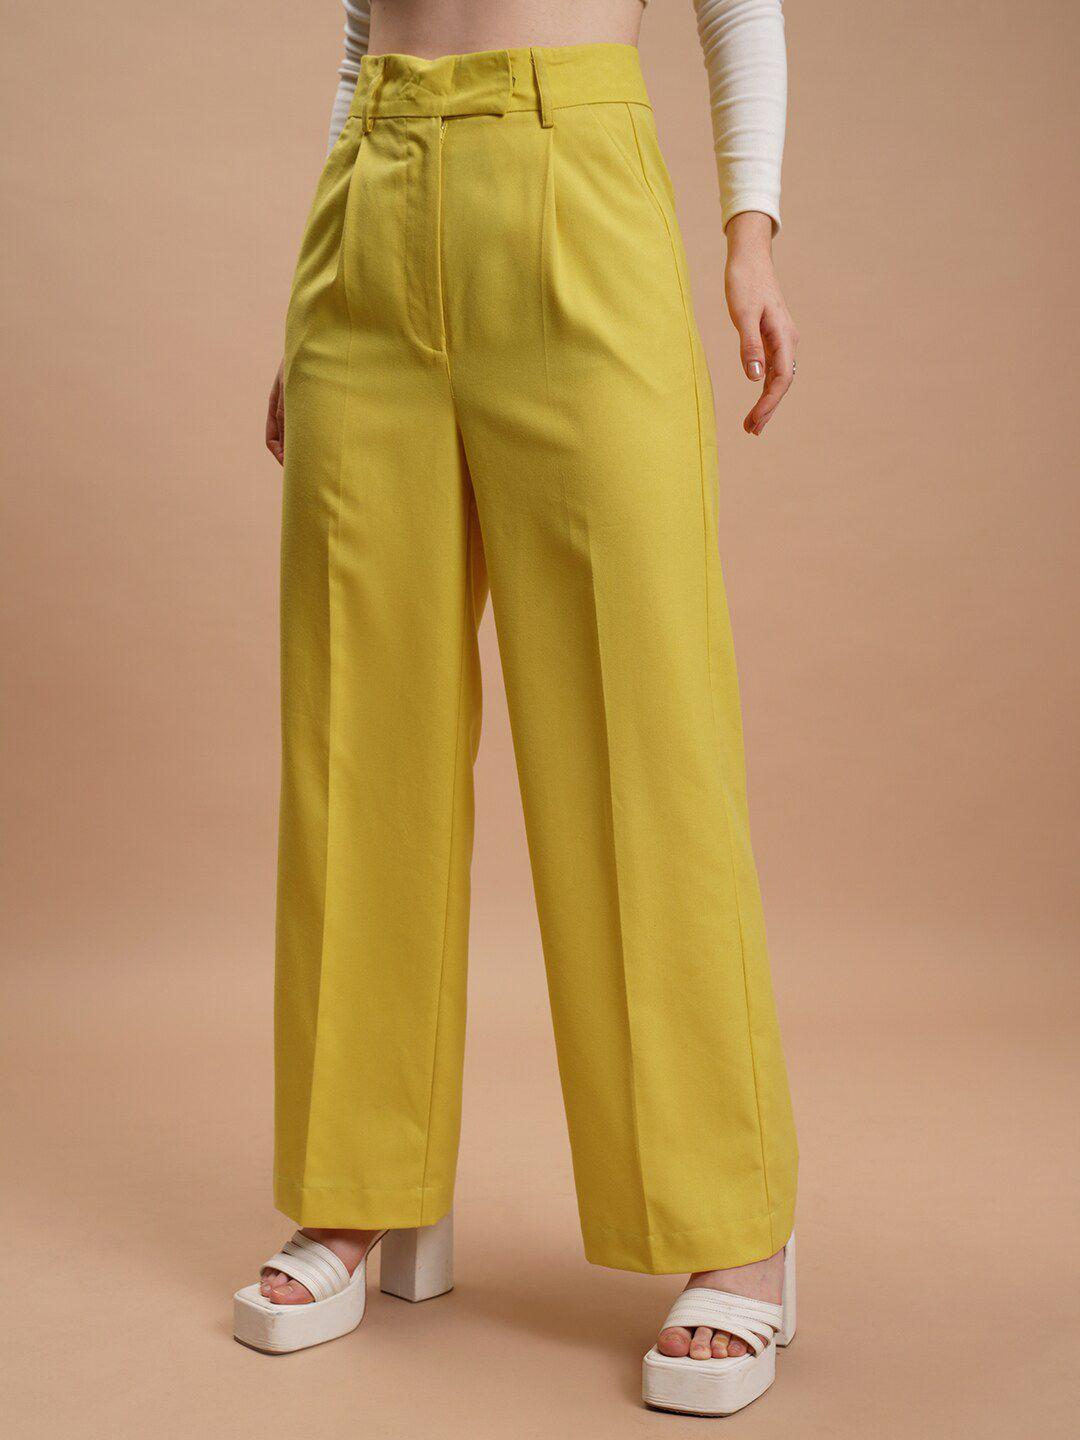 tokyo talkies women yellow flared trousers